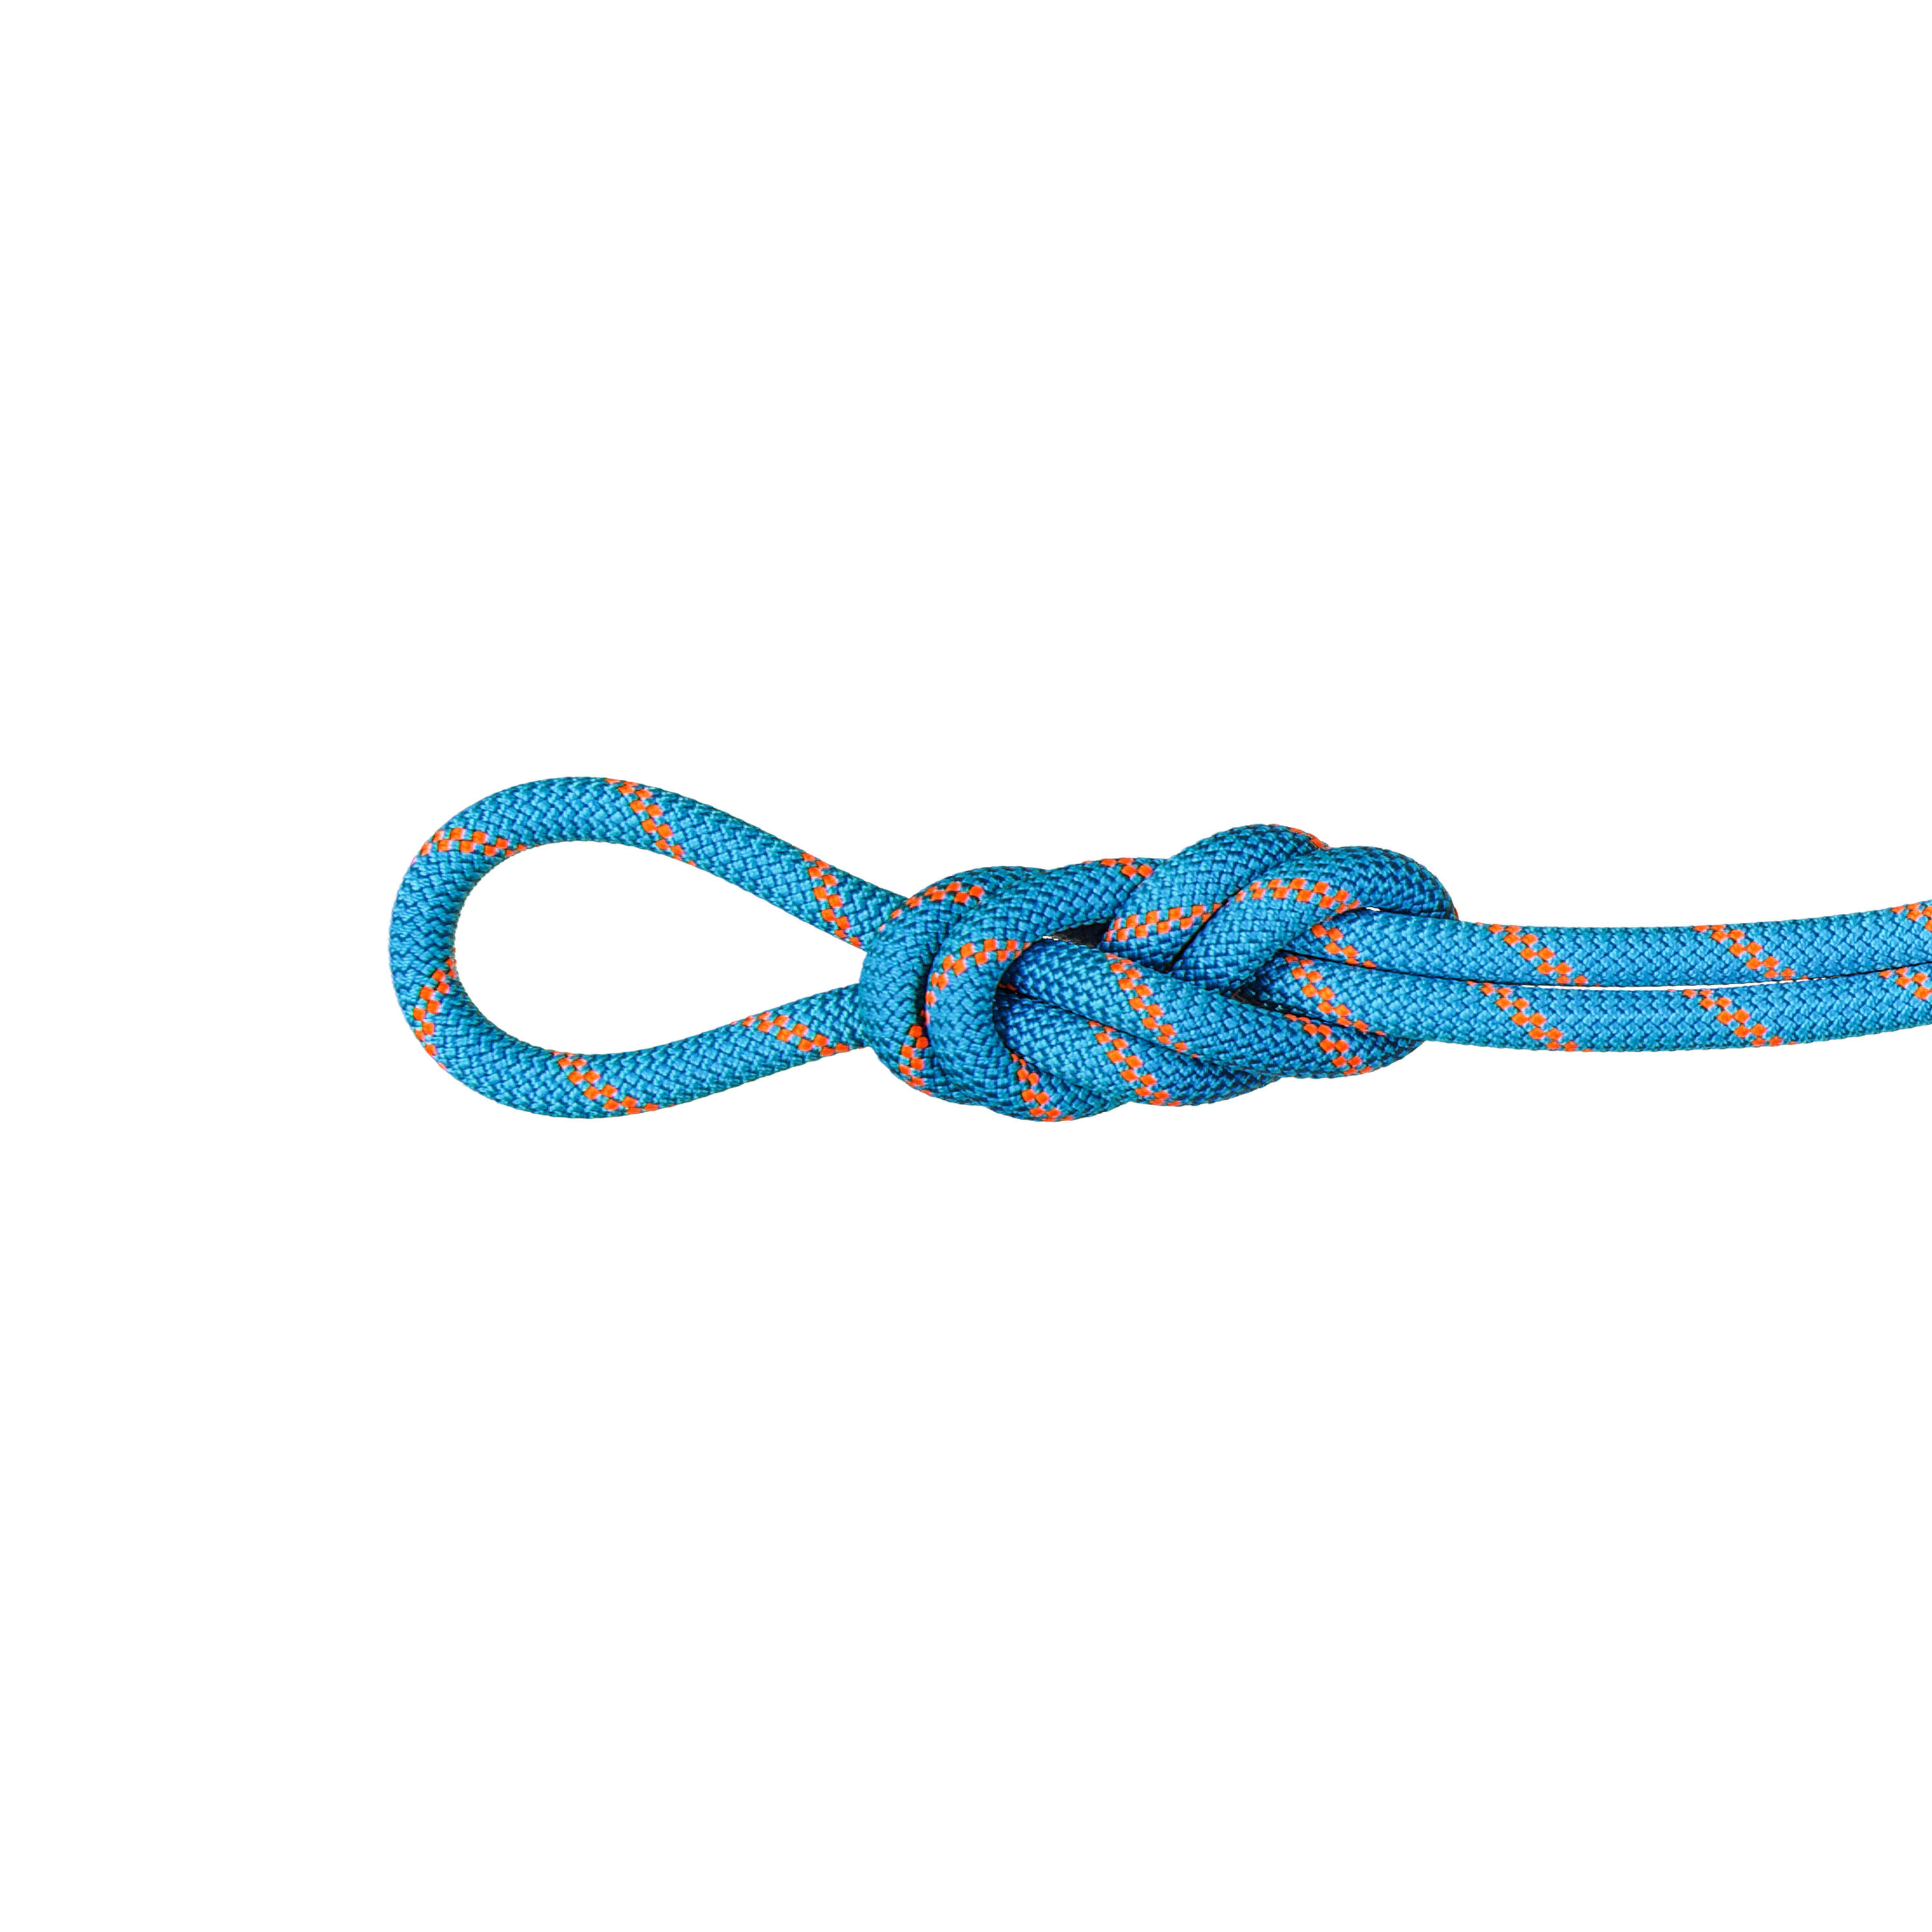 MAMMUT Alpine Sender Dry Triple-Rated Rope 8.7 mm x 60m - Blue